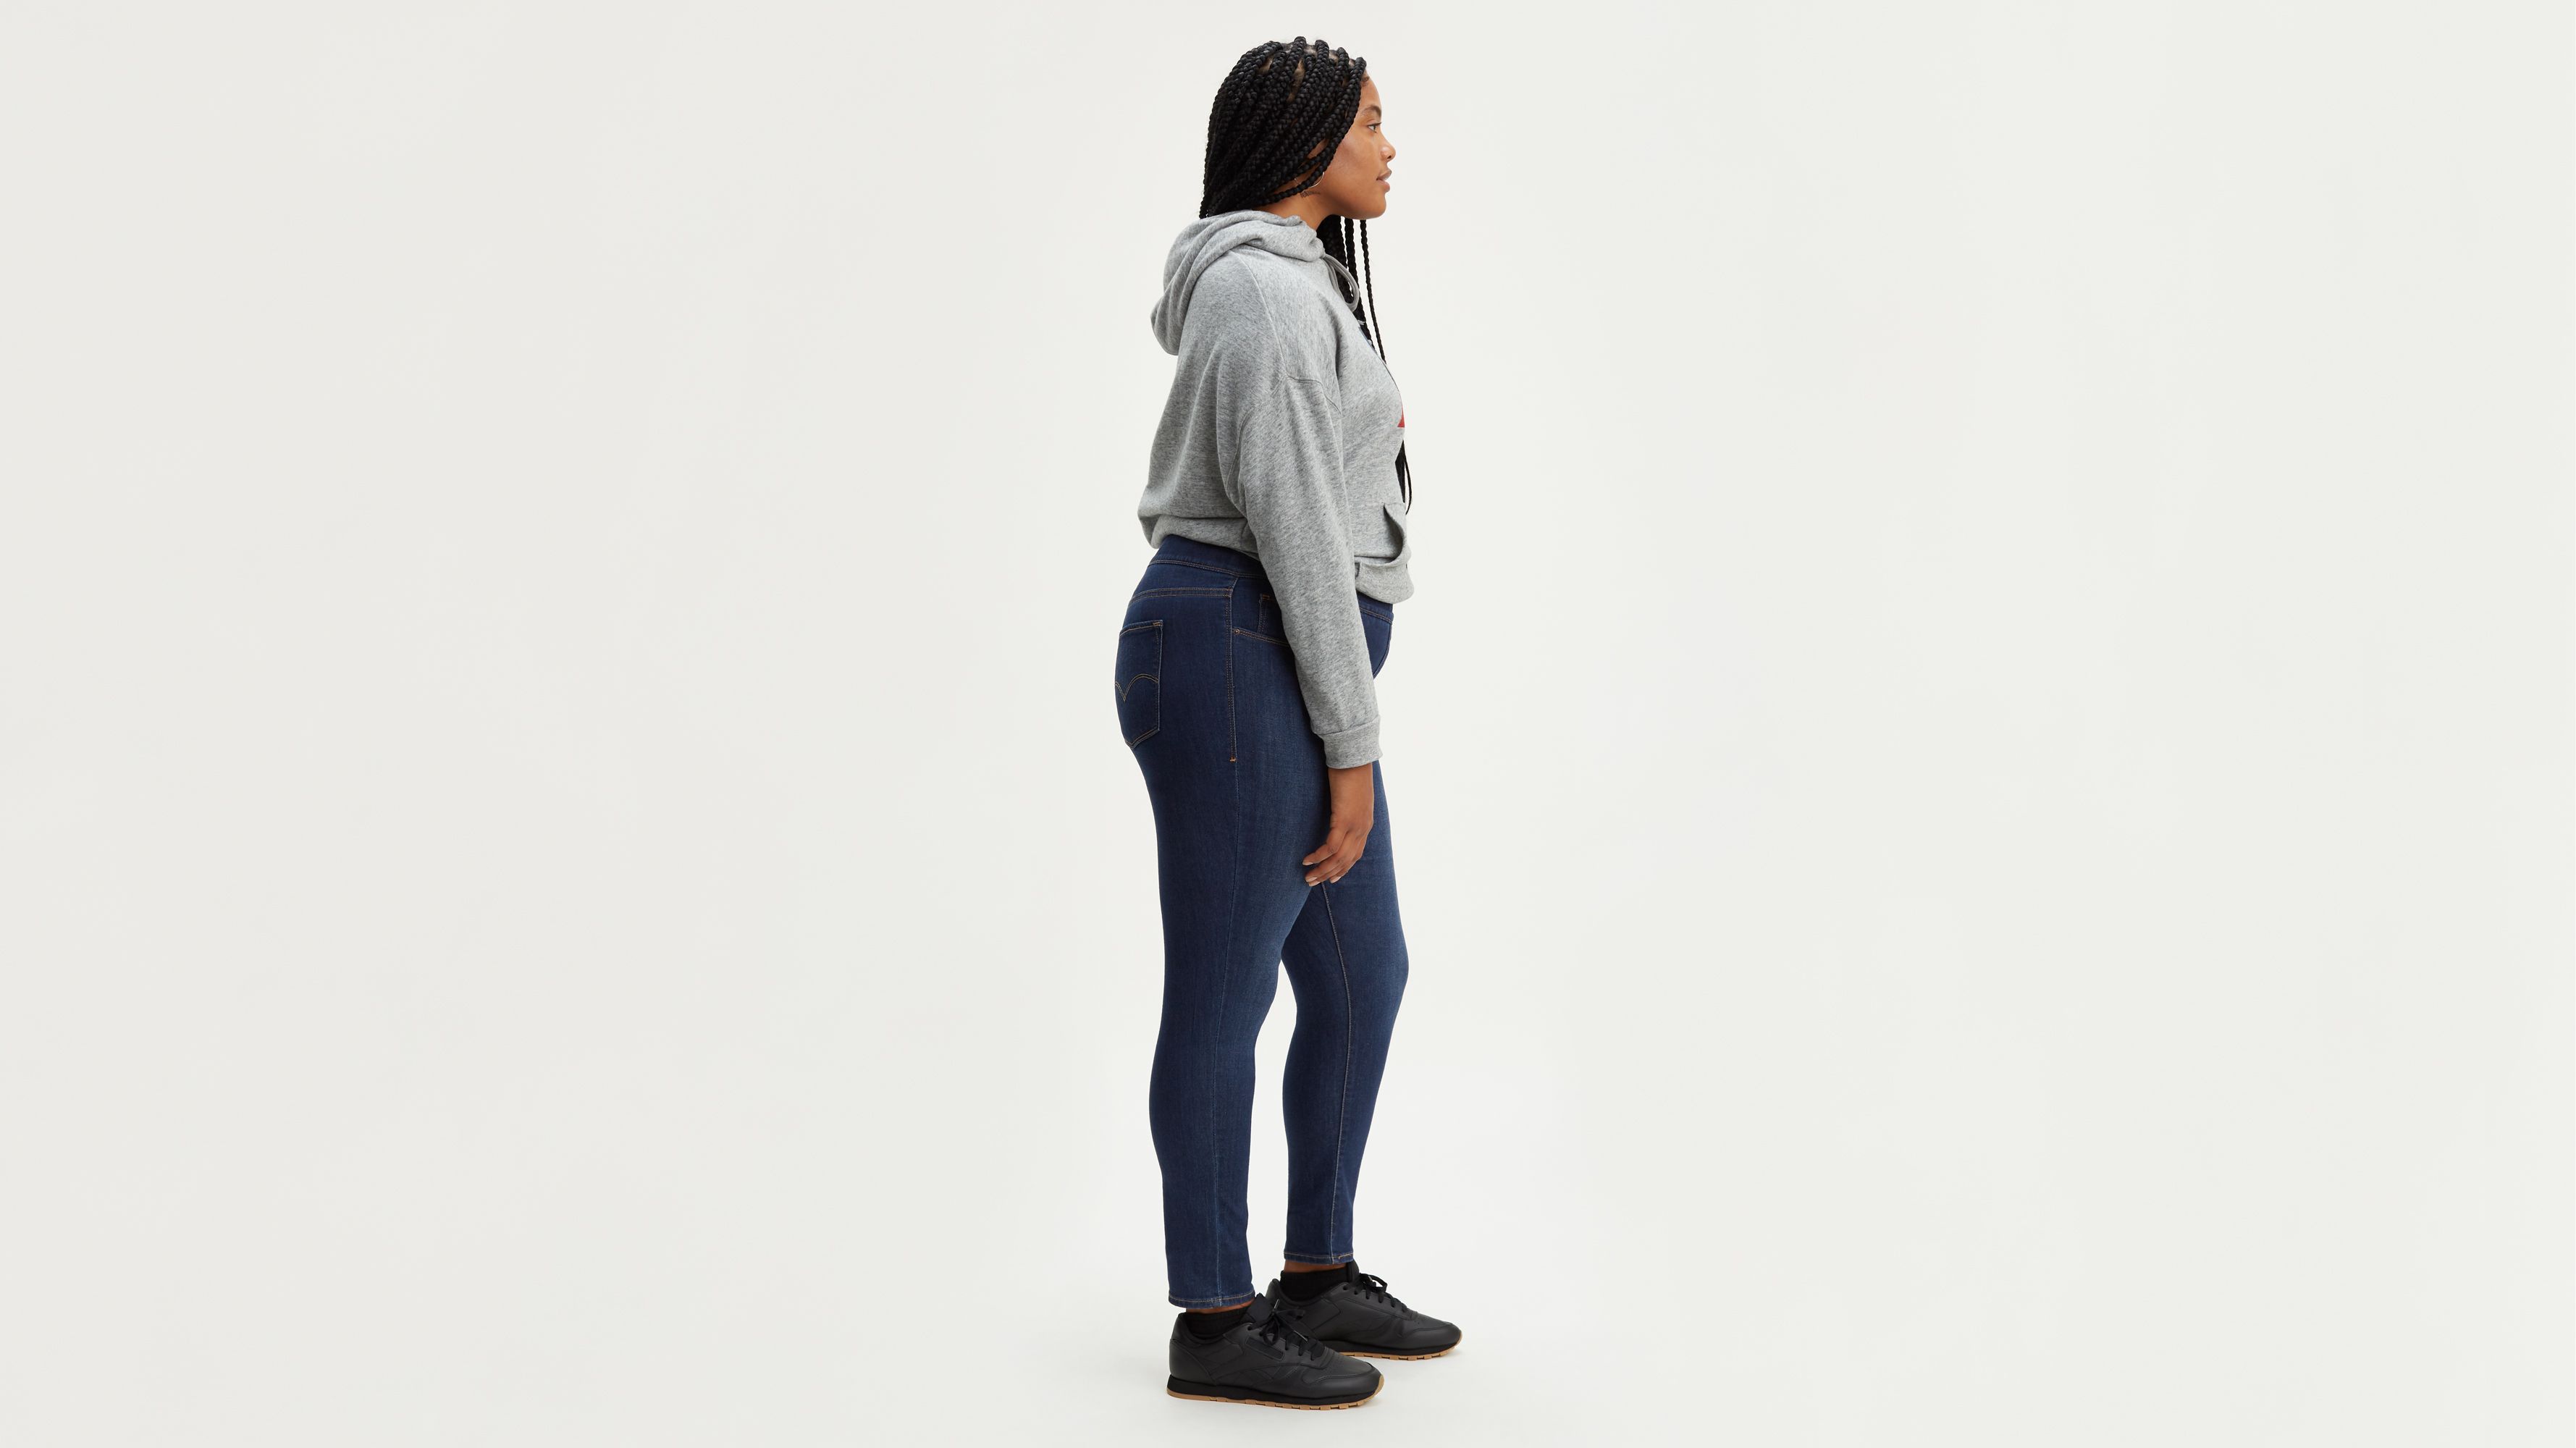 310 Shaping Super Skinny Women's Jeans (plus Size) - Dark Wash | Levi's® US